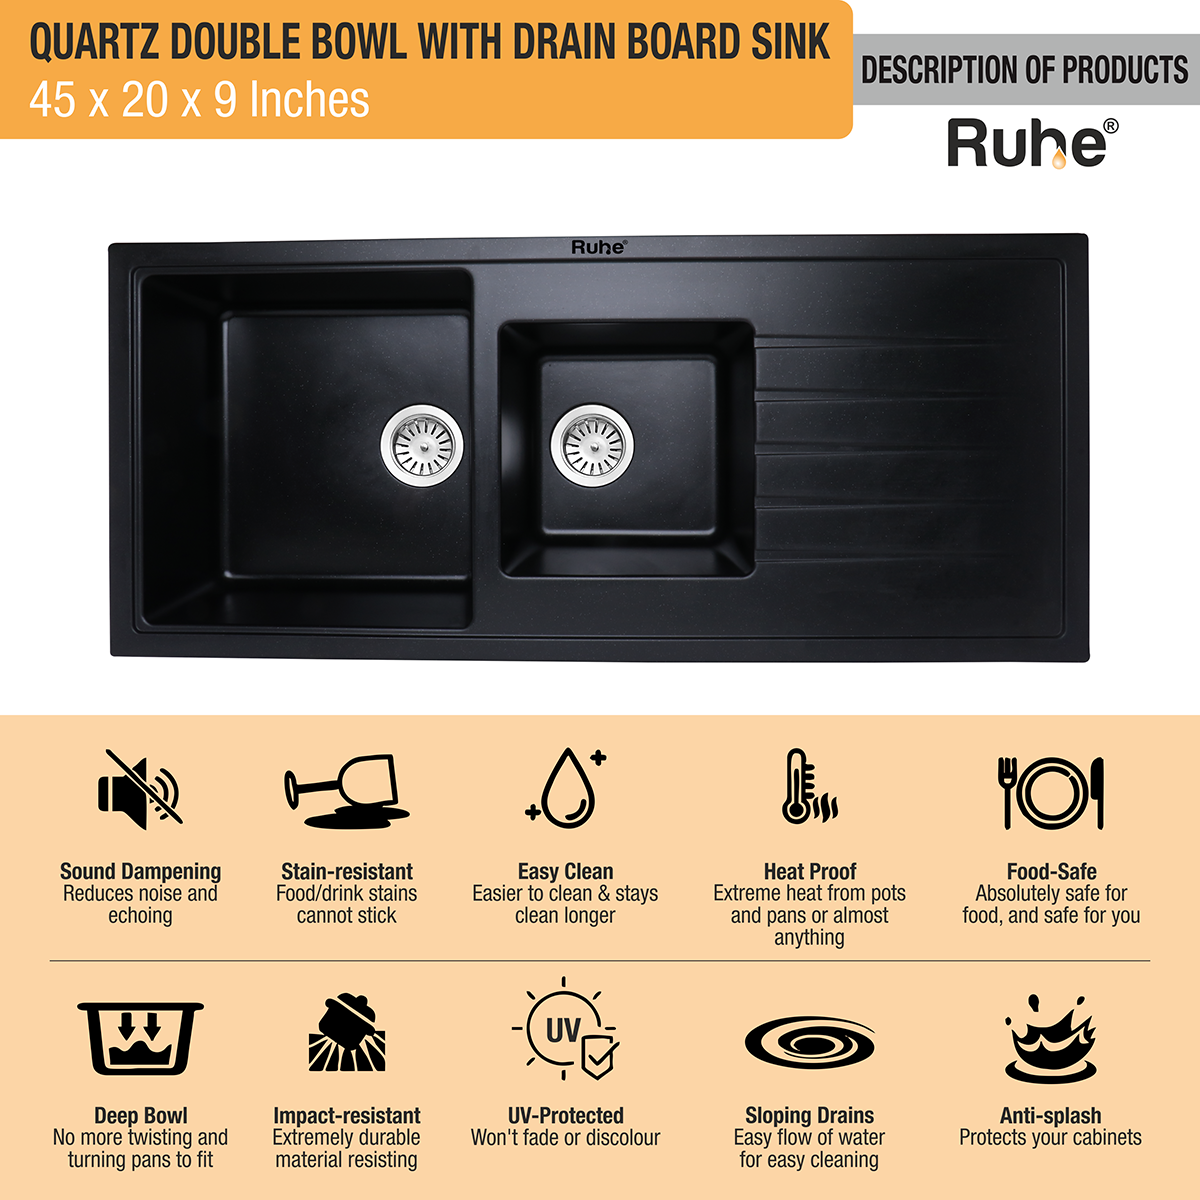 Quartz Double Bowl with Drainboard Kitchen Sink - Matte Black (45 x 20 x 9 inches) 3